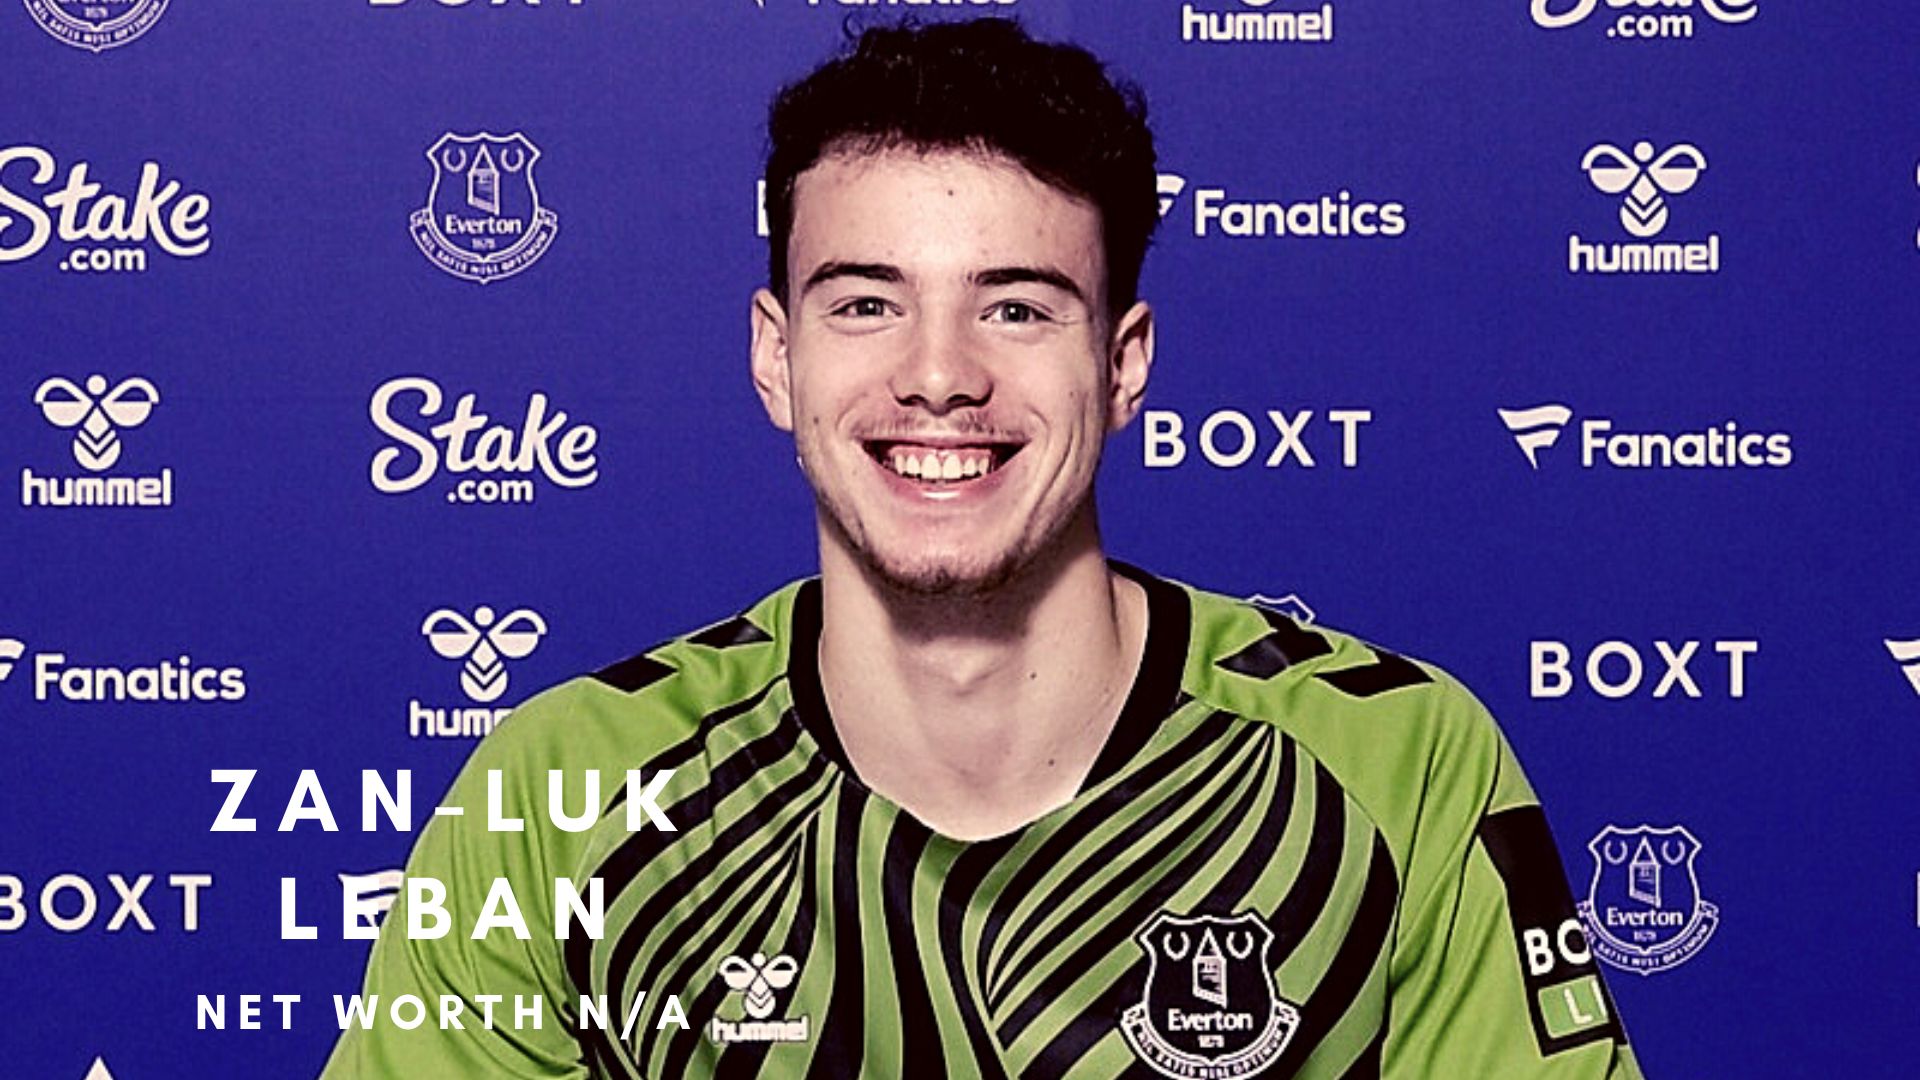 Zan-Luk Leban of Everton.